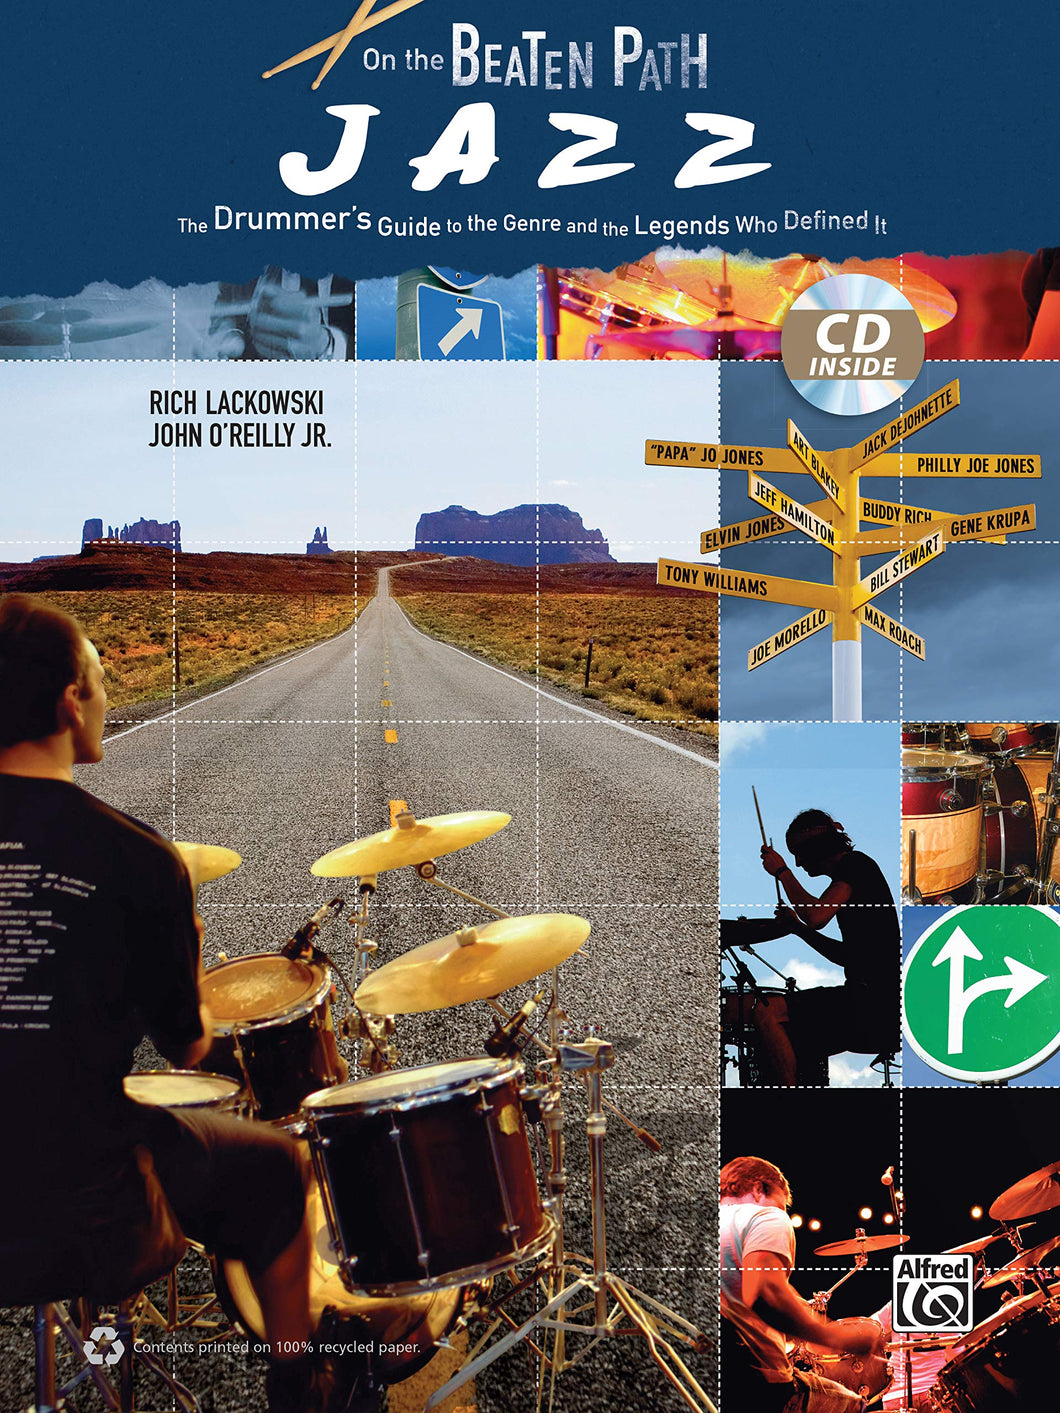 Ko Ko - Charlie Parker - Collection of Drum Transcriptions / Drum Sheet Music - Alfred Music OBPJDGLDI